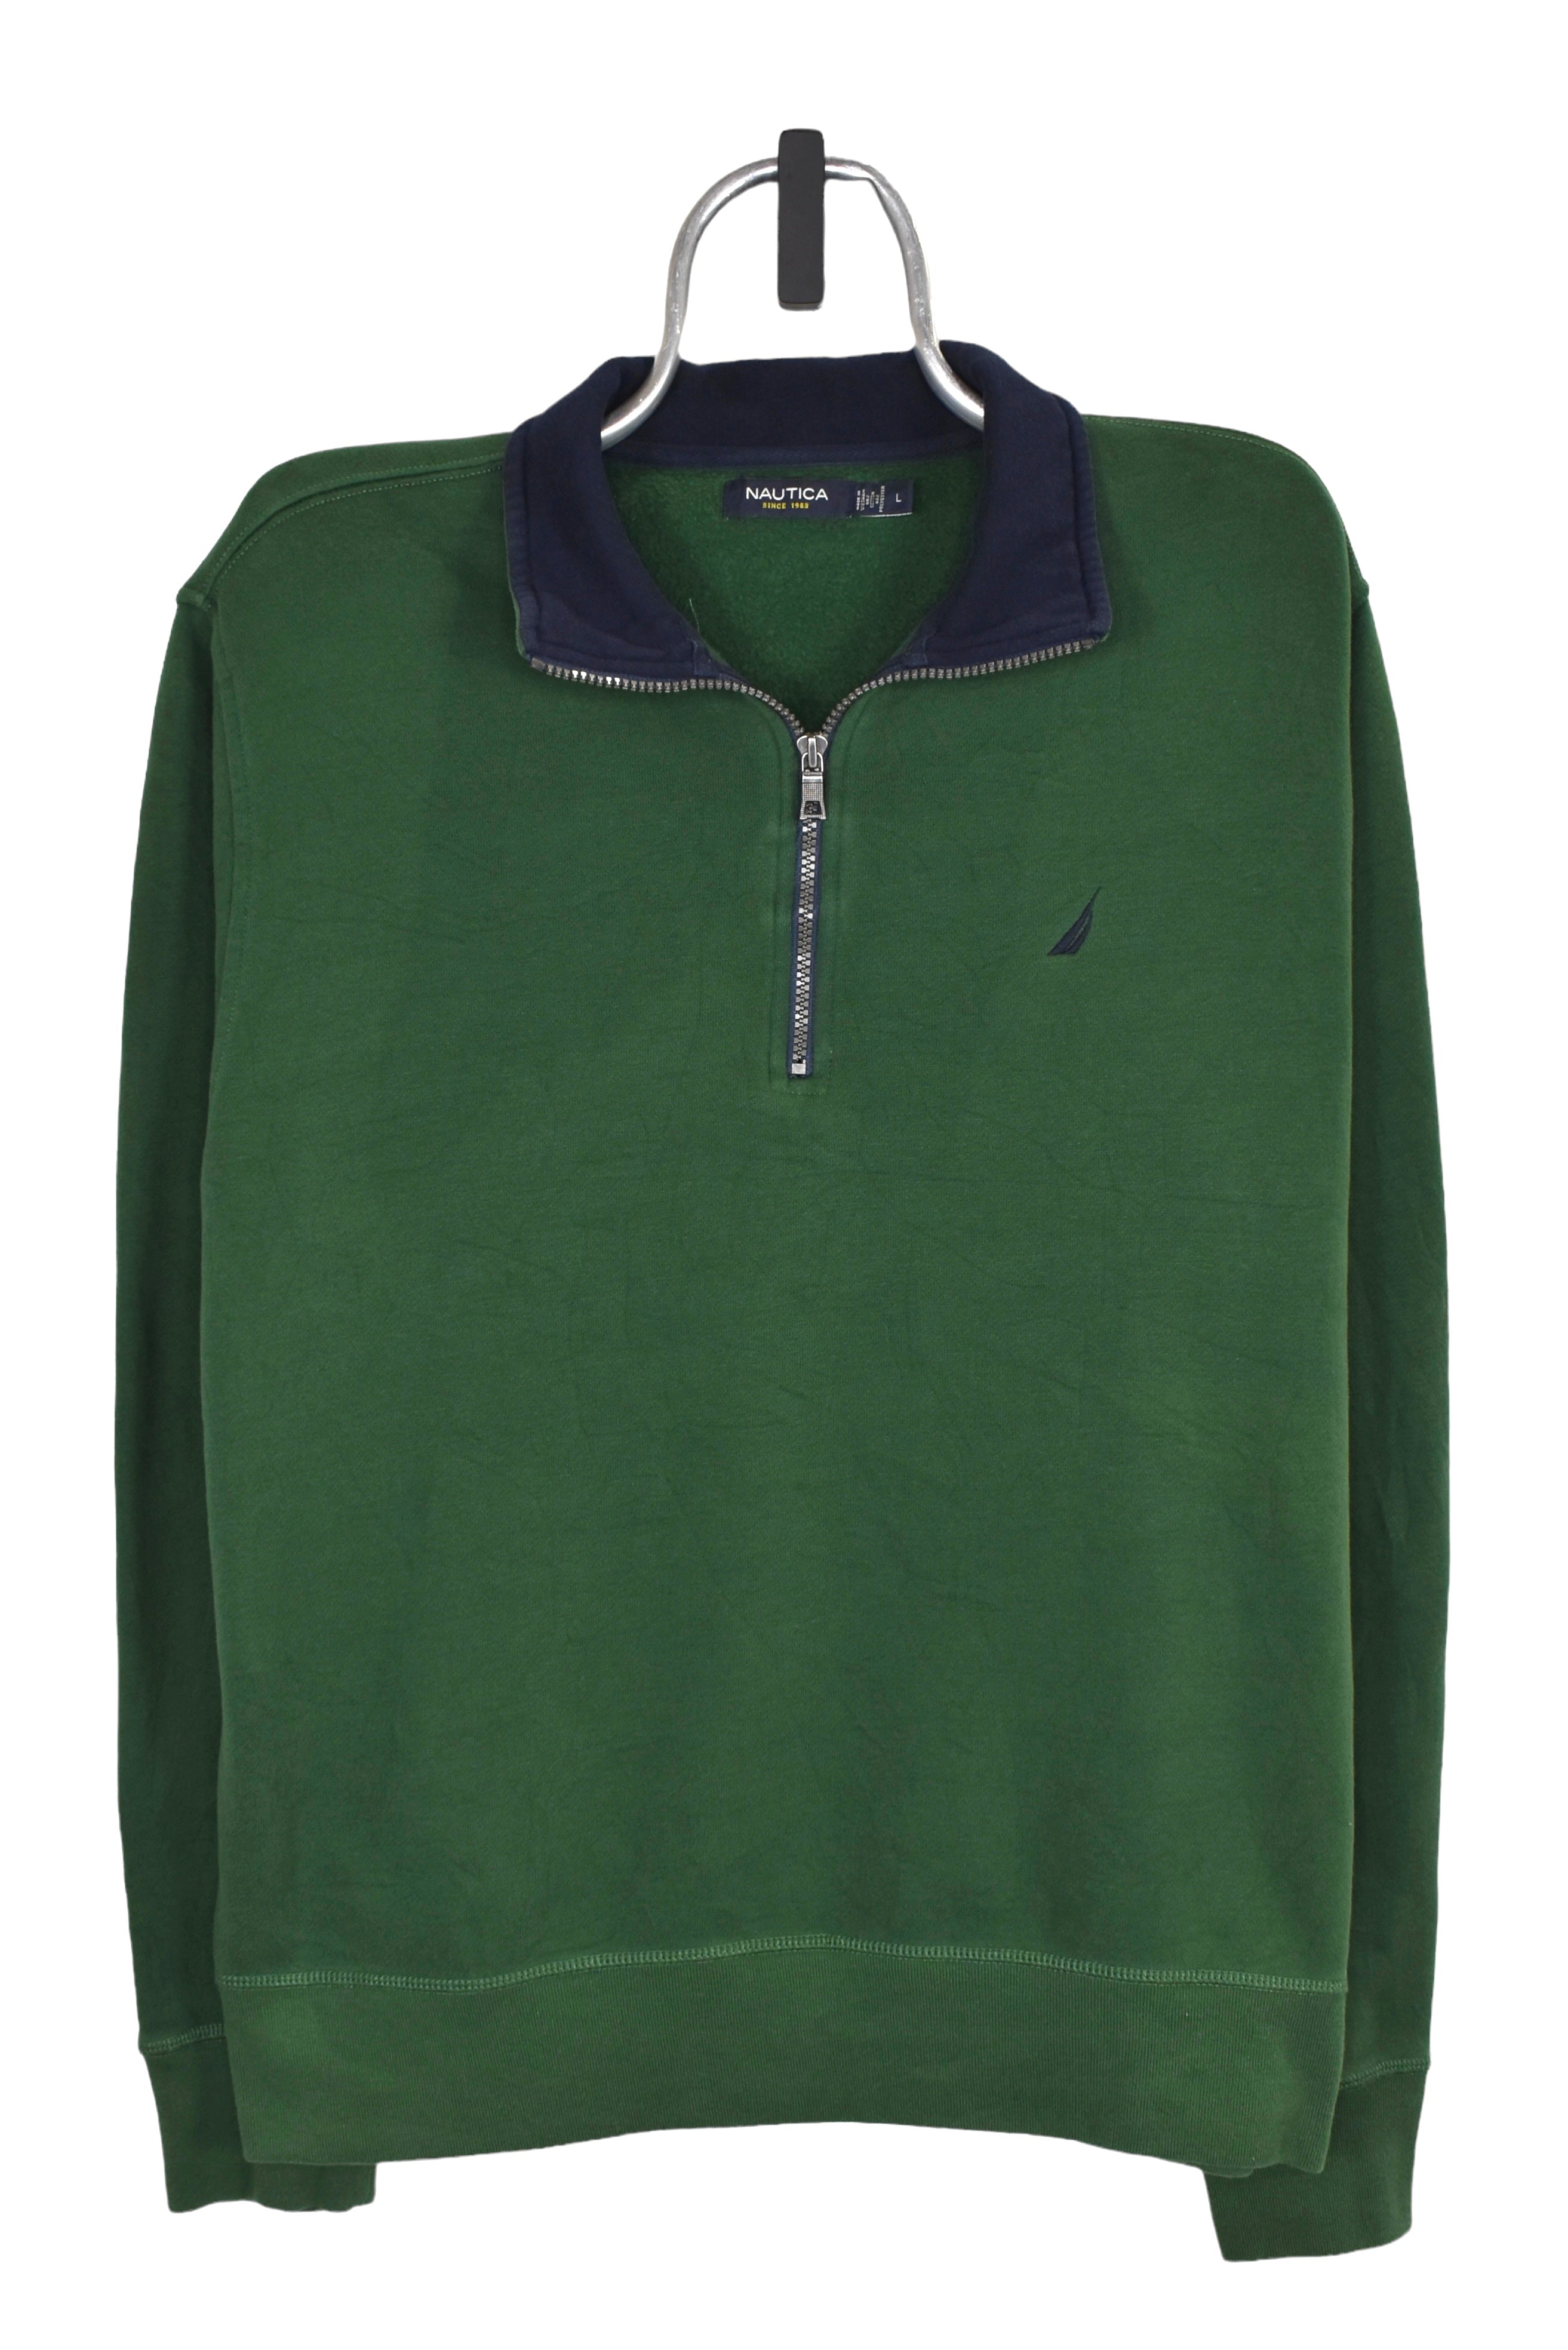 Vintage Nautica 1/4 zip (L), green embroidered sweatshirt